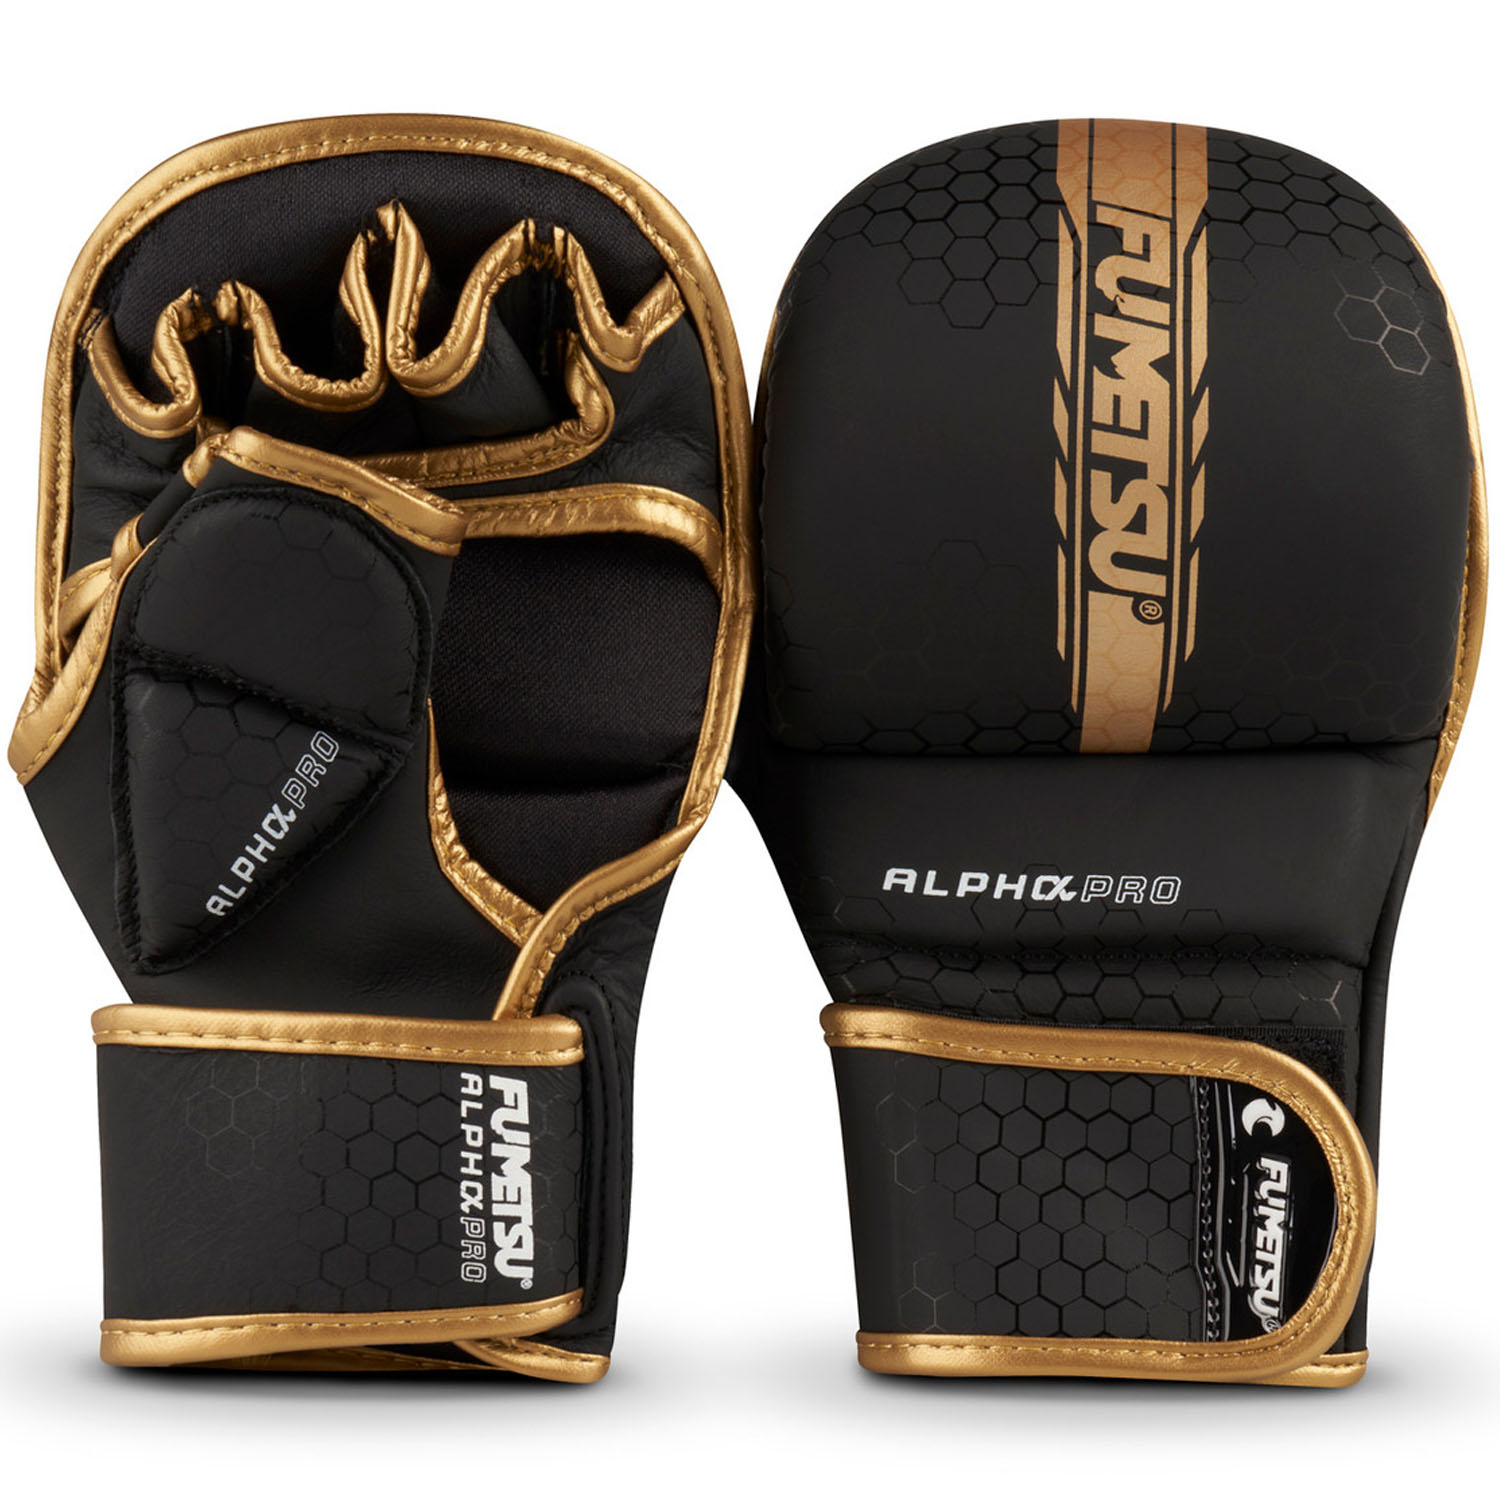 Fumetsu MMA Sparring Boxing Gloves, Alpha Pro, black-gold, S/M